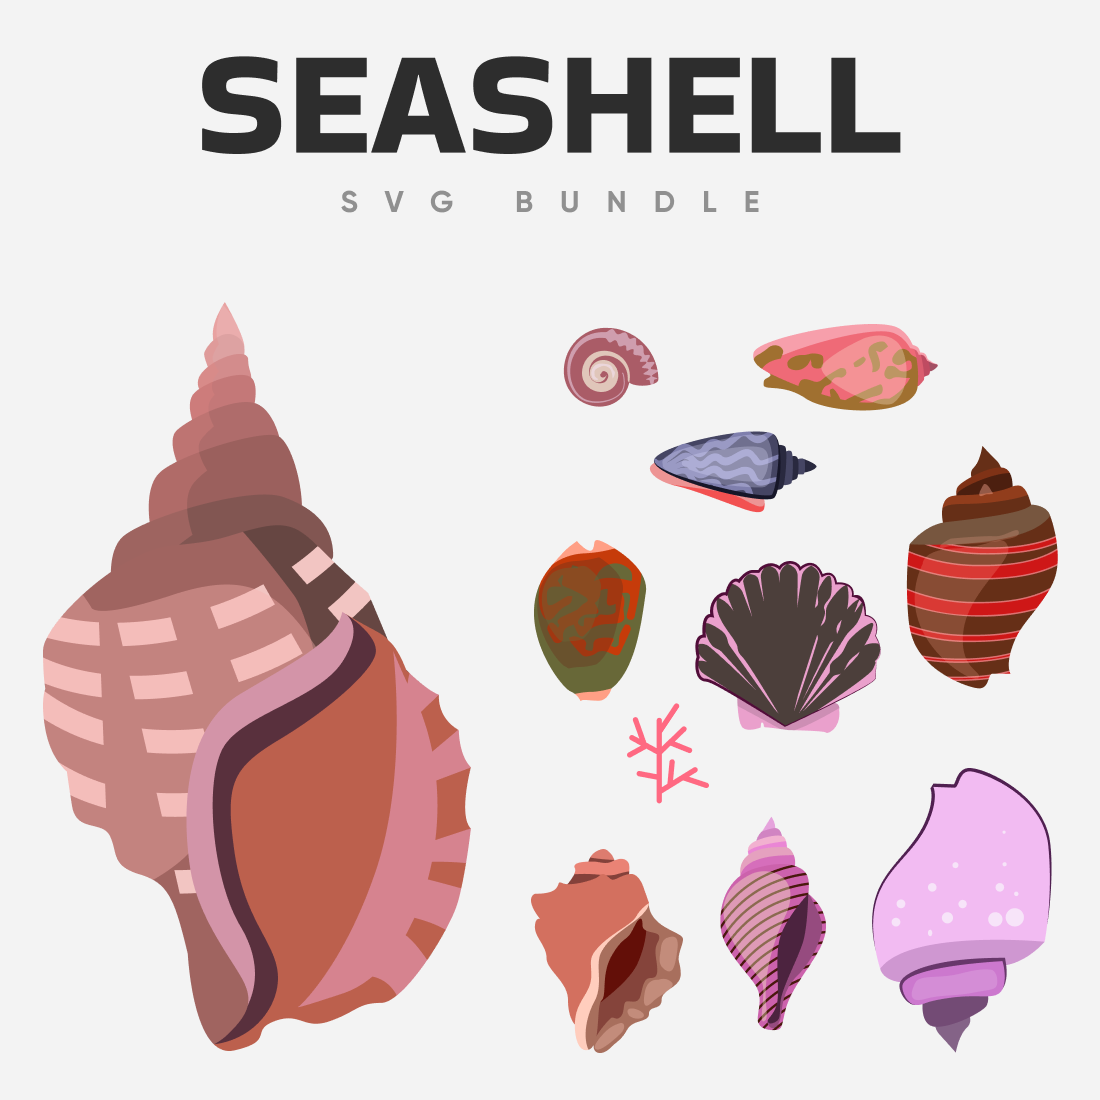 Beauty seashell SVG bundle.